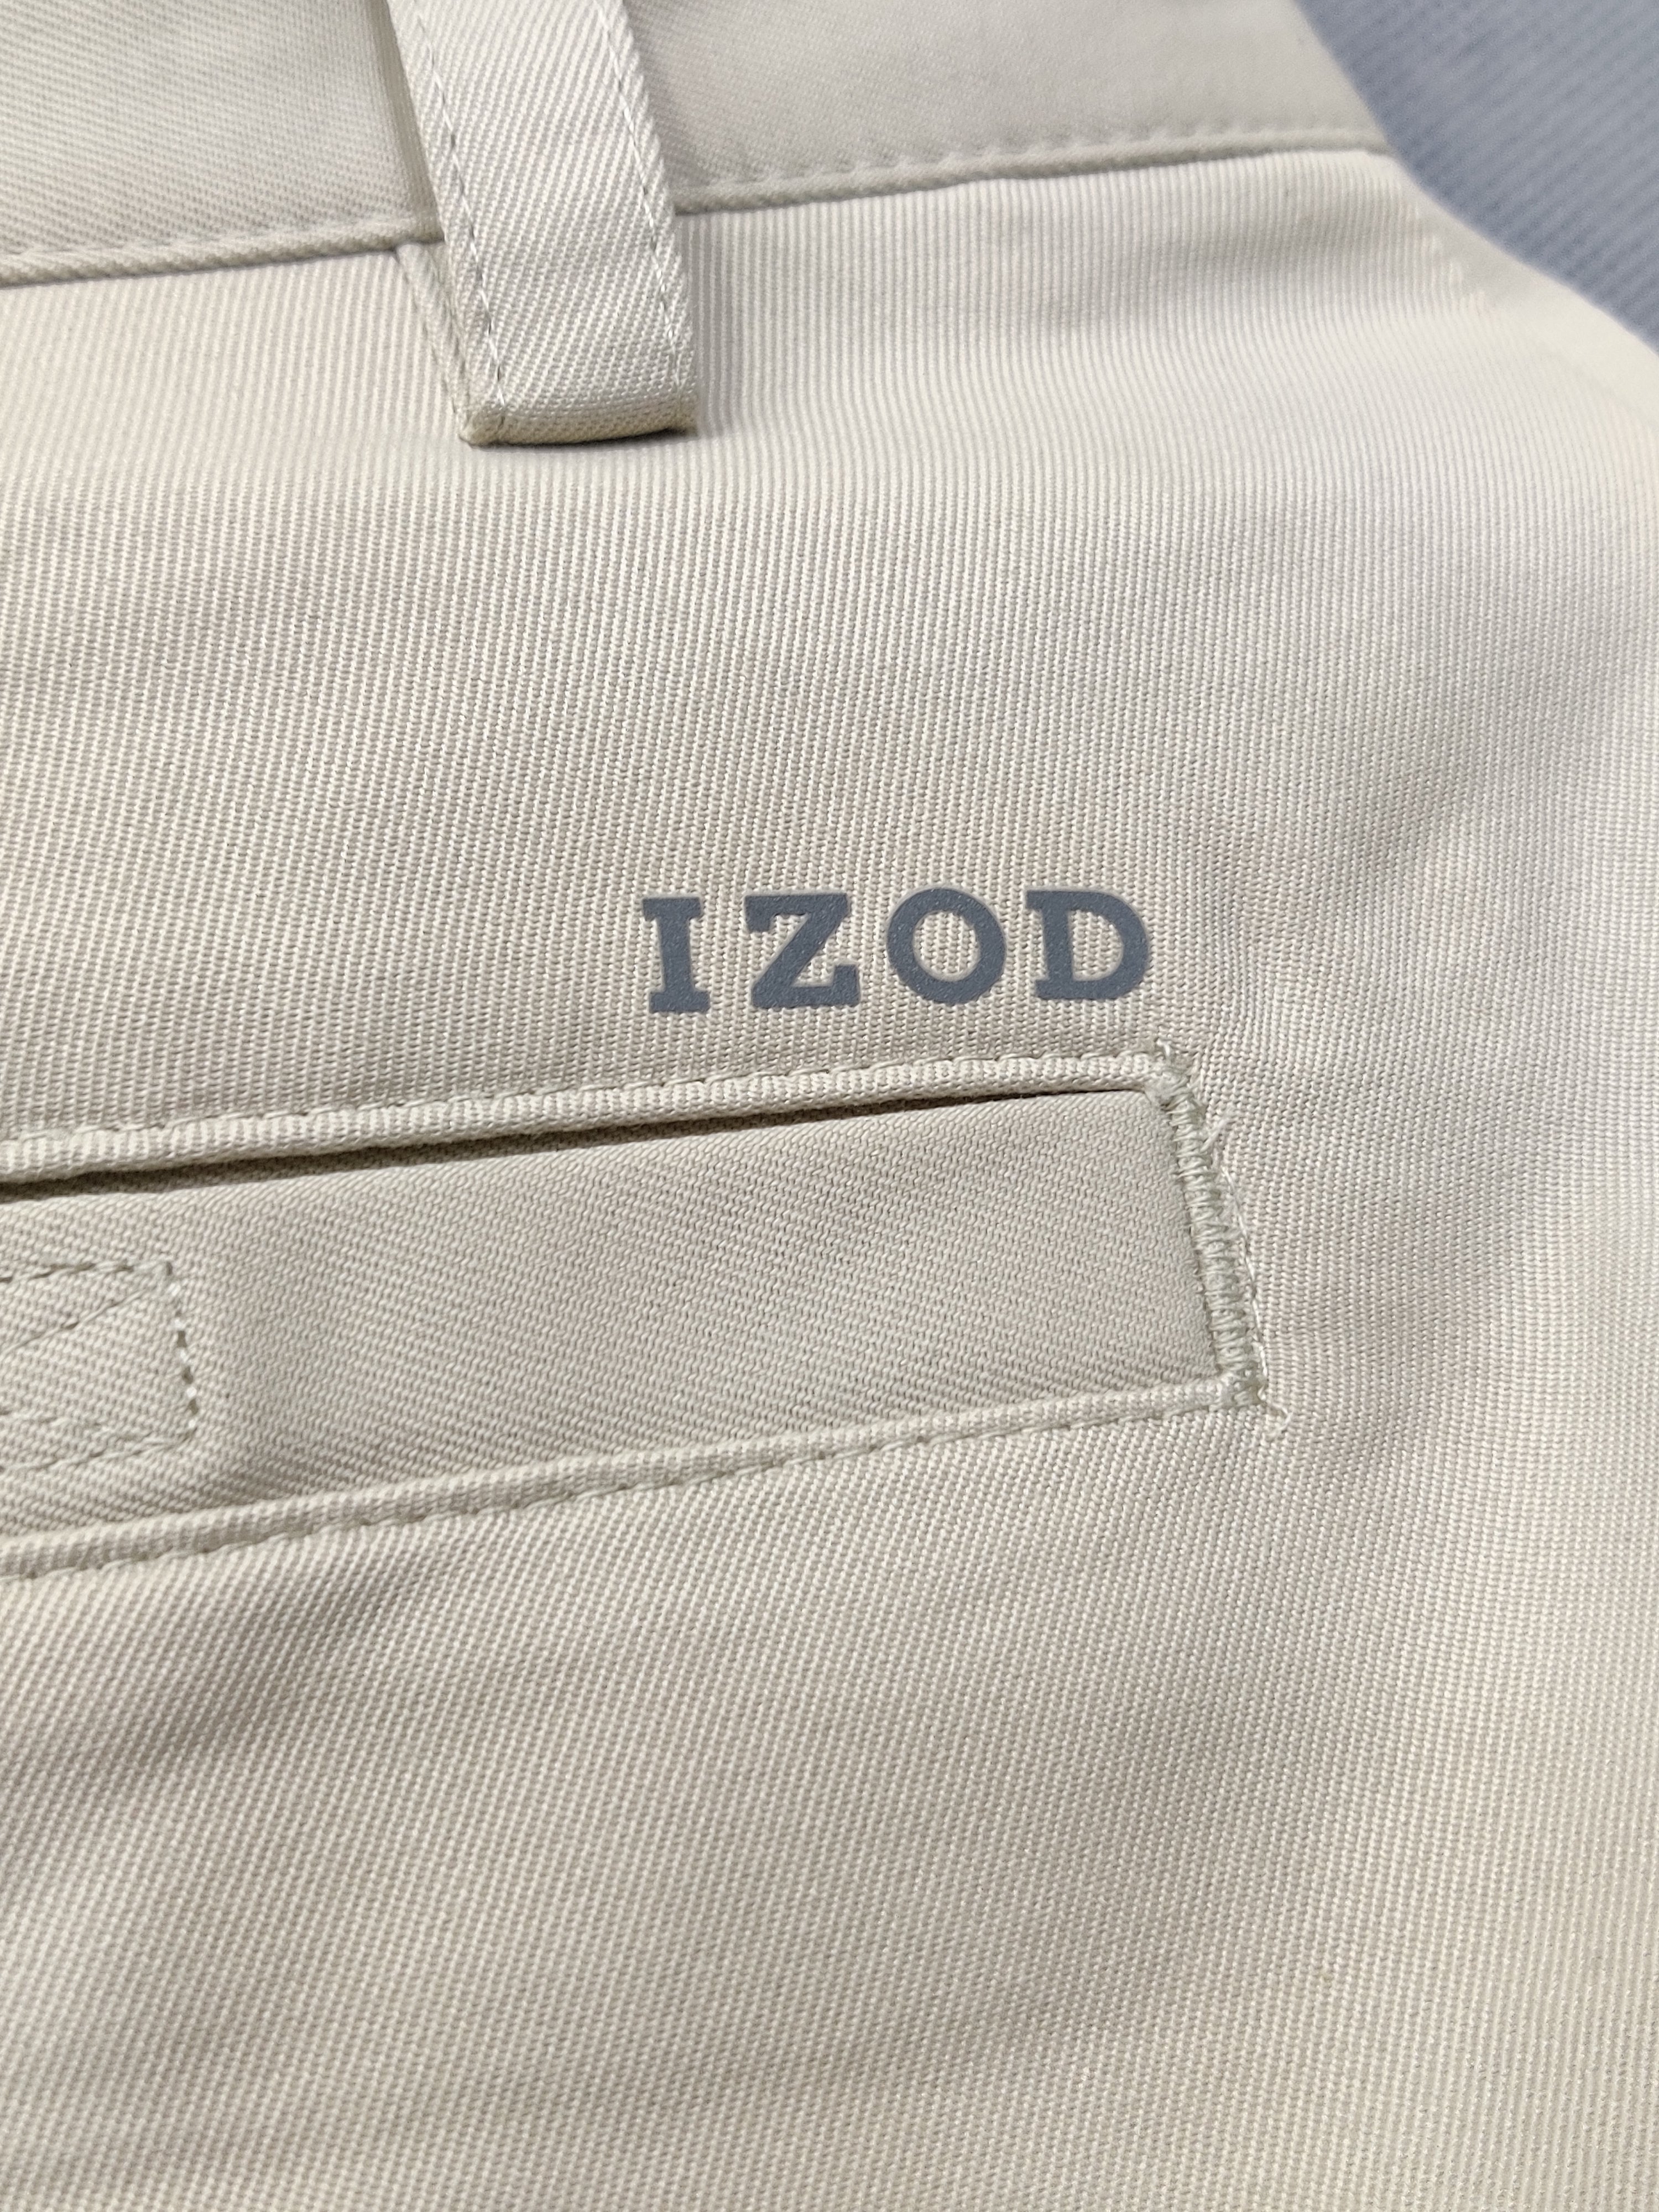 Izod Branded Original Cotton Short For Men